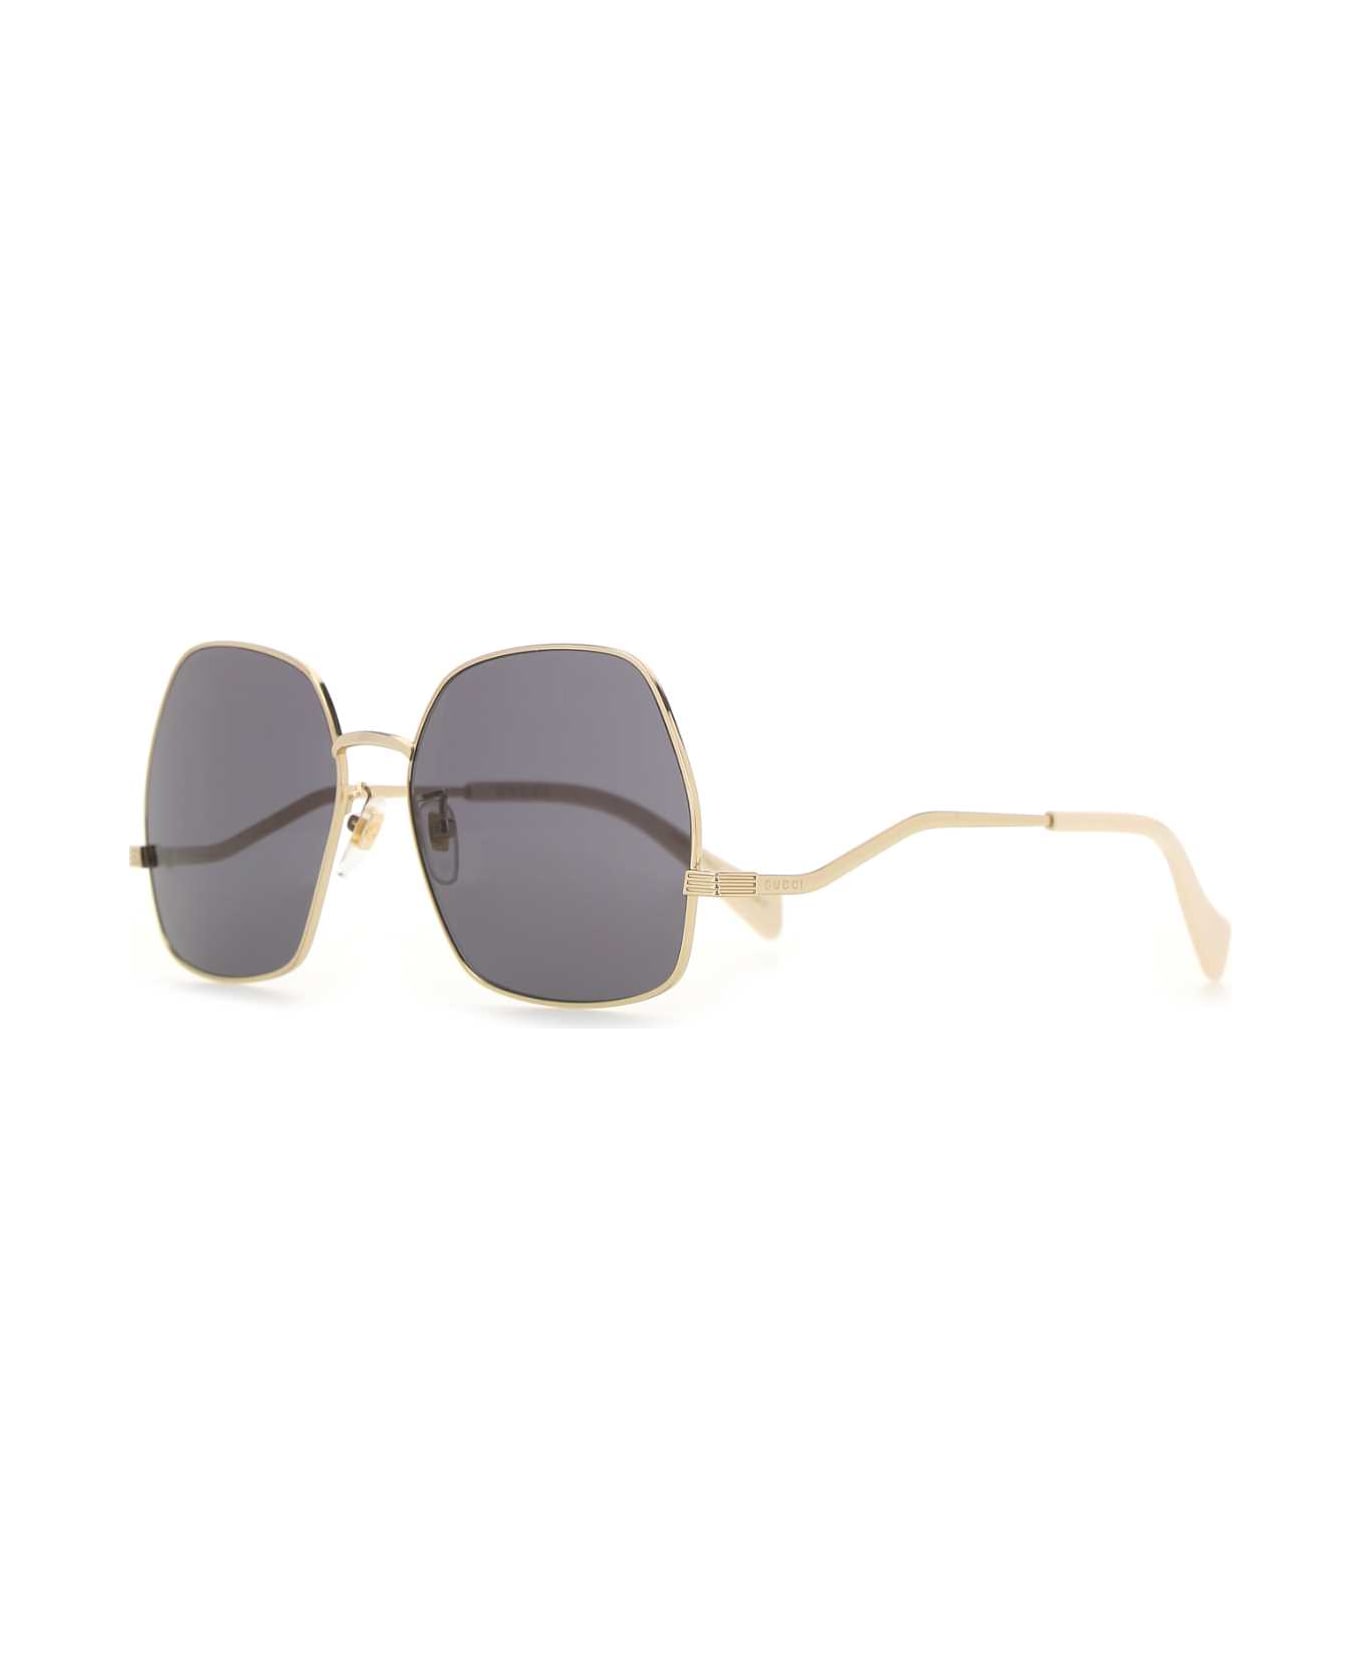 Gucci Gold Metal Sunglasses - 8012